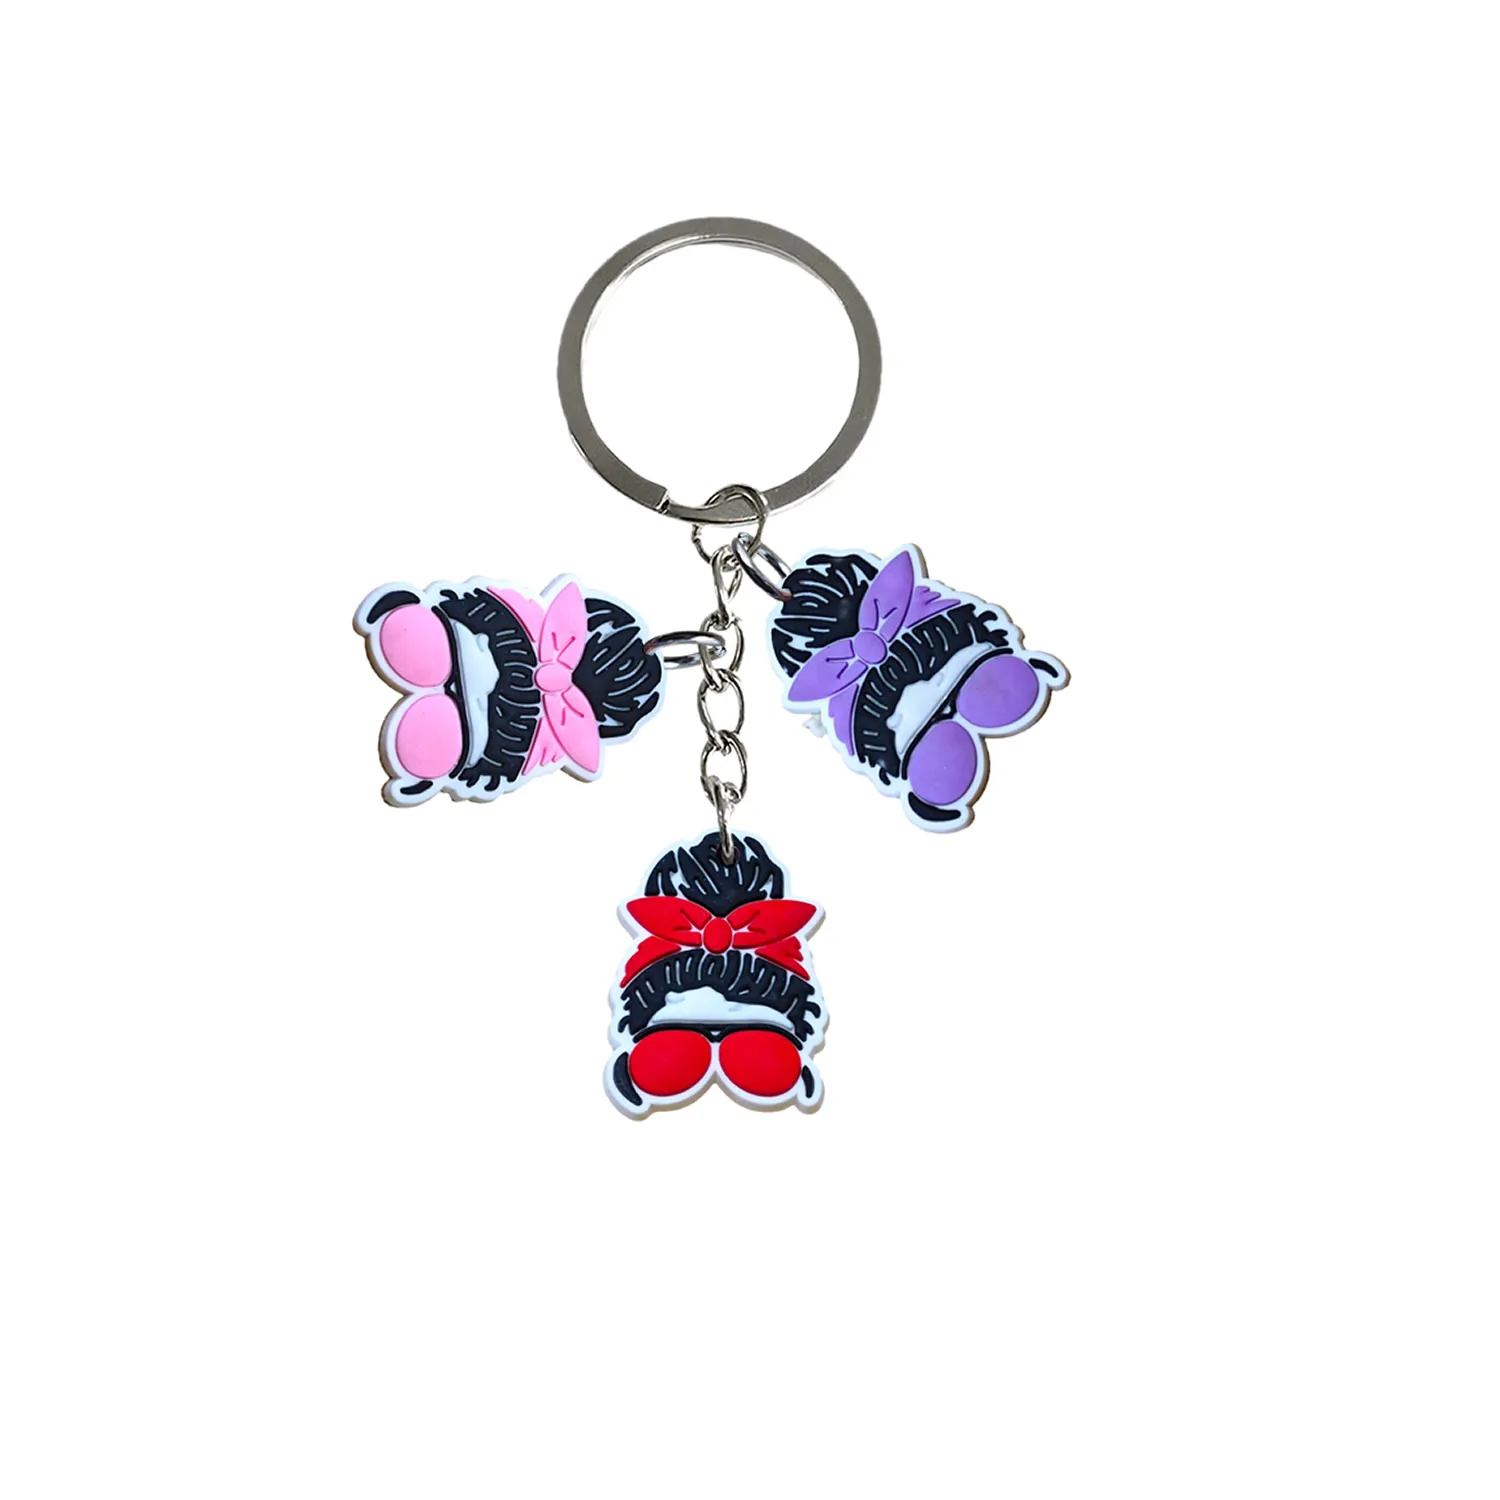 cartoon keychain fashion cute creative design key chain multiple pendants key chain car bag pendant for party birthday gifts unisex